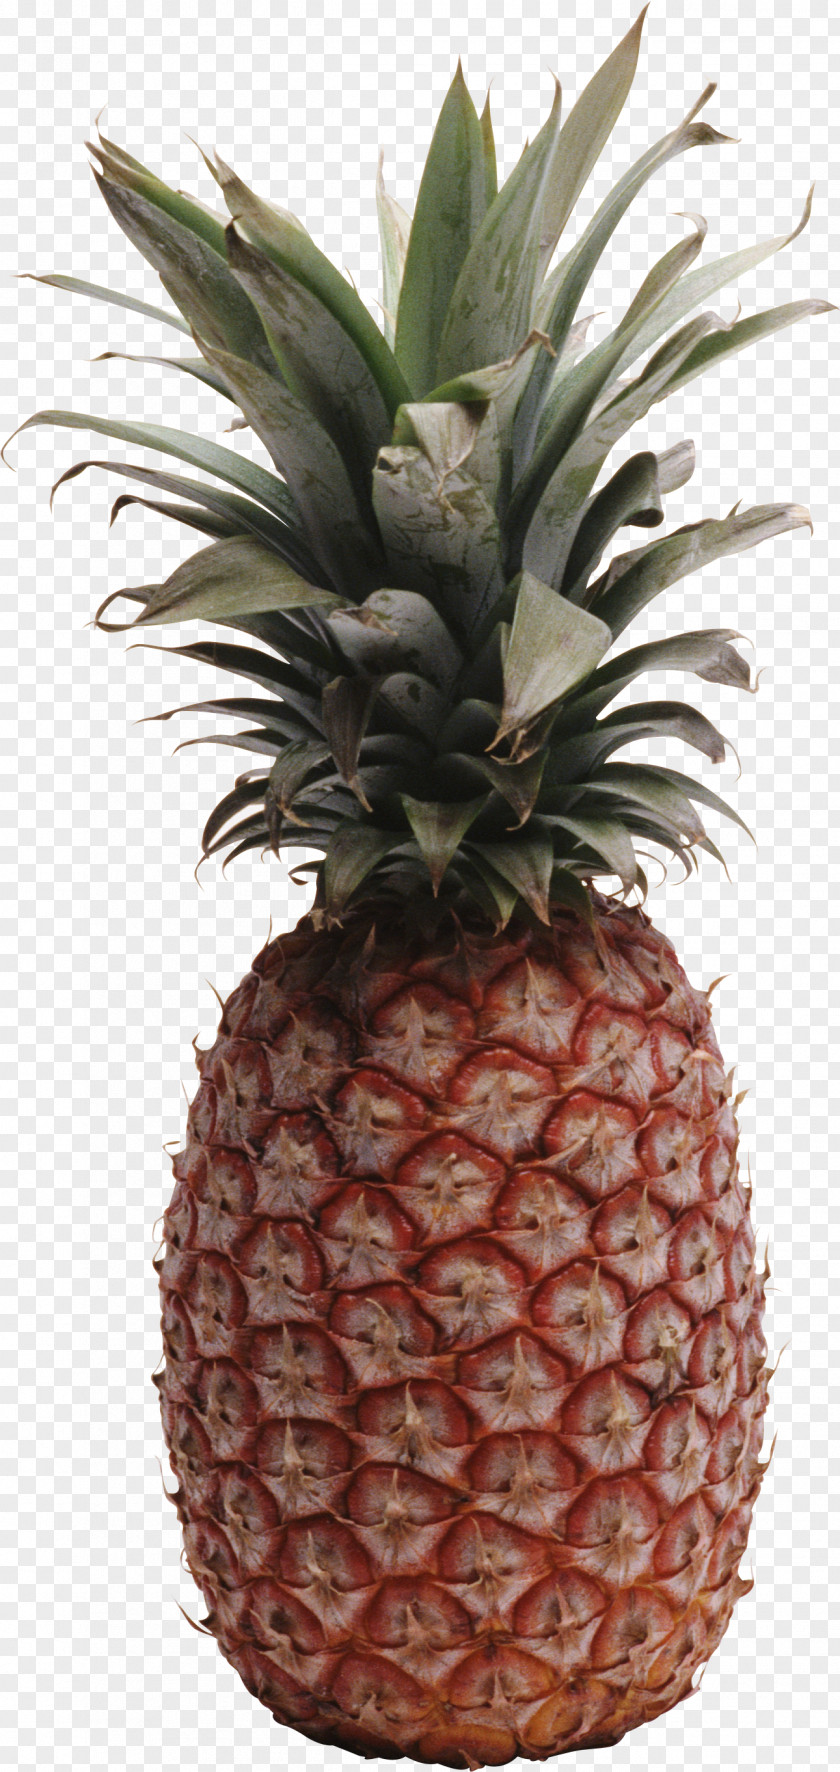 Pineapple Image, Free Download Fruit Clip Art PNG